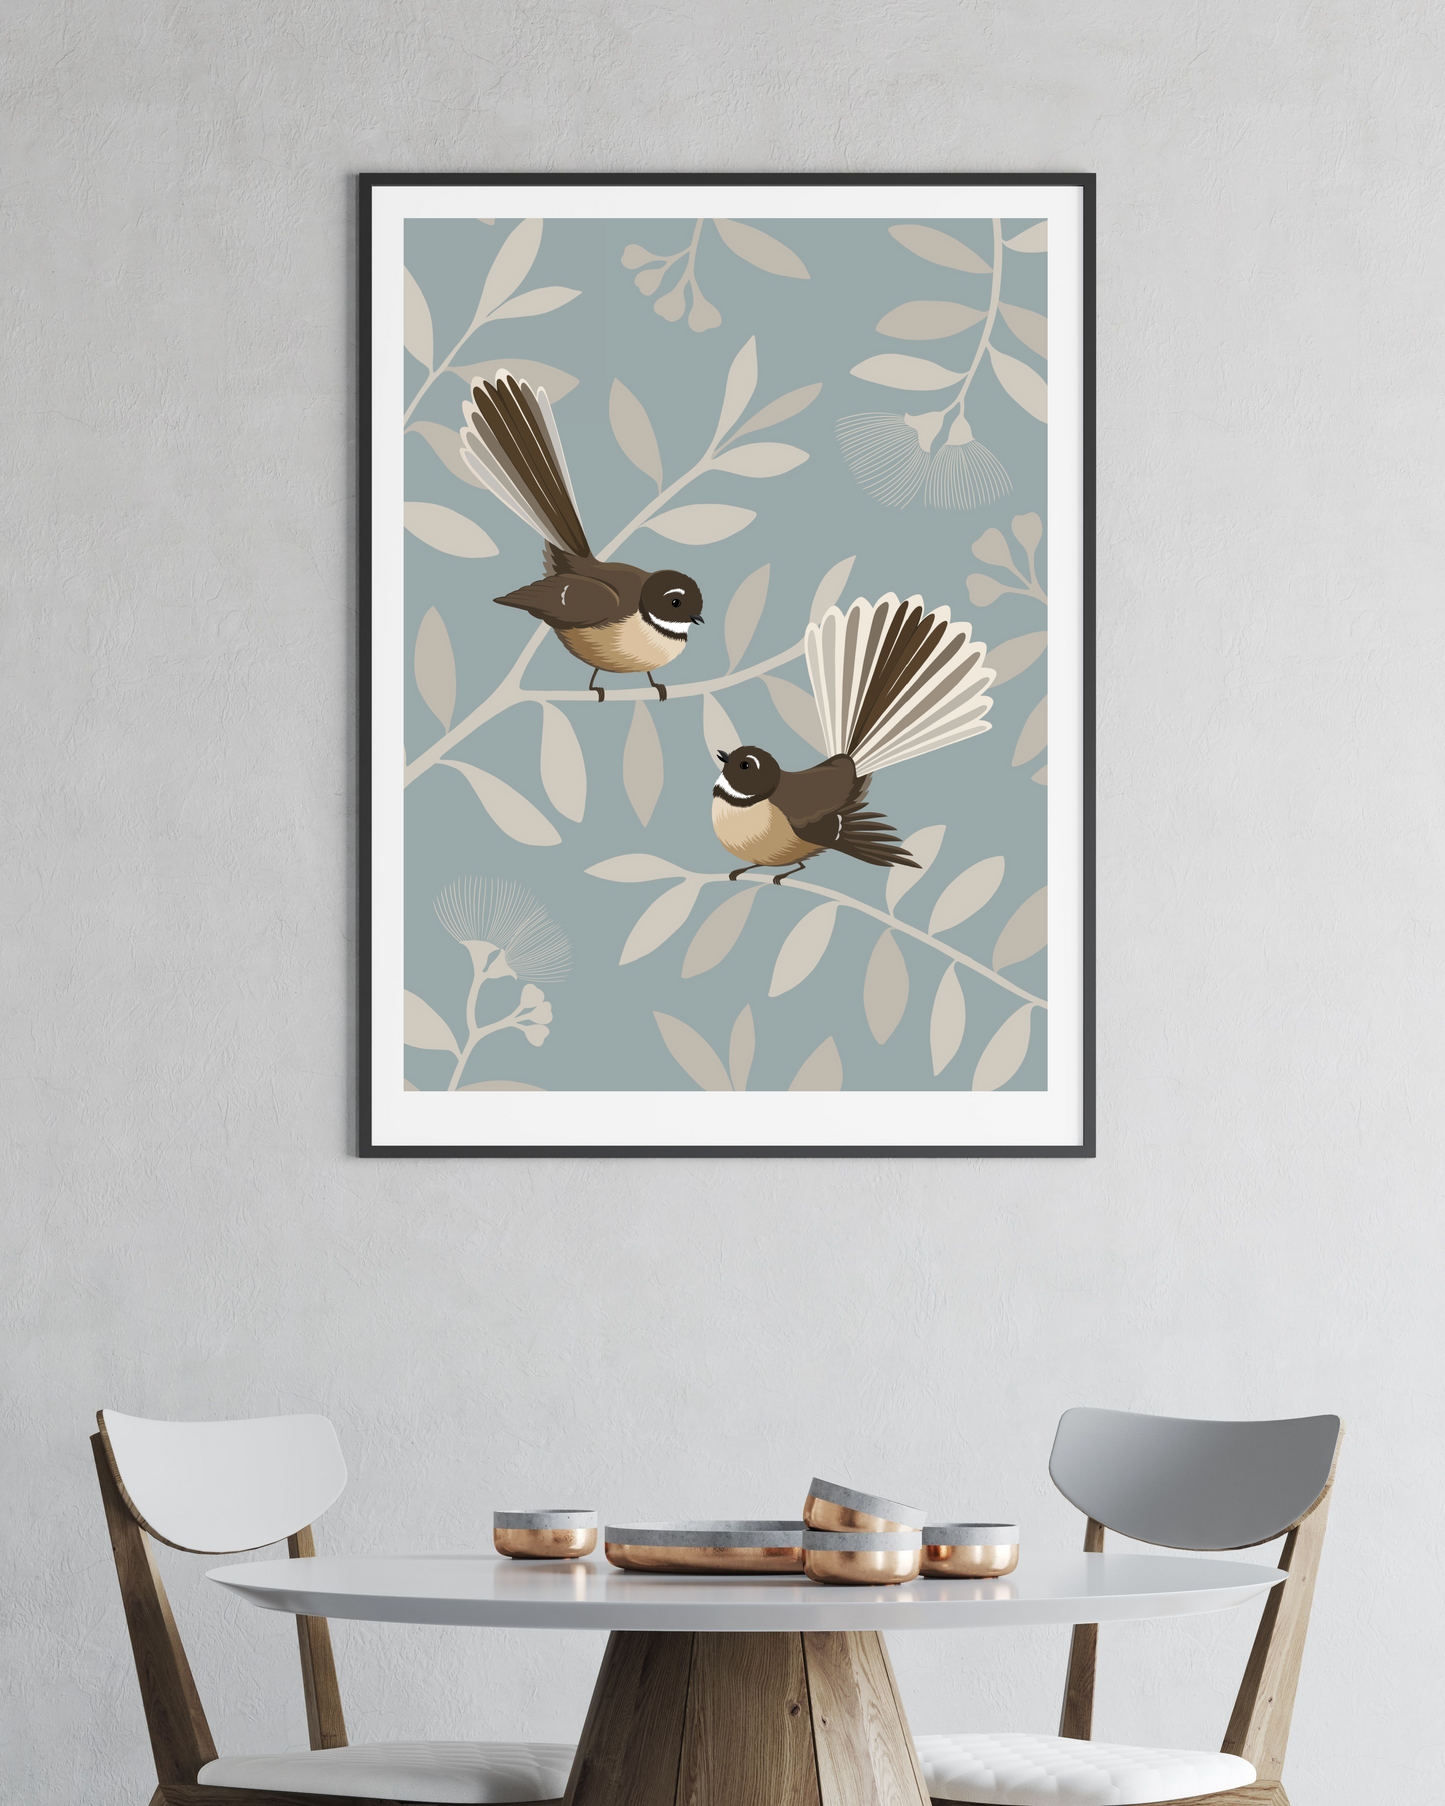 Lifestyle image of the Fantail Pair / Pīwakawaka  art print, by NZ artist Hansby Design